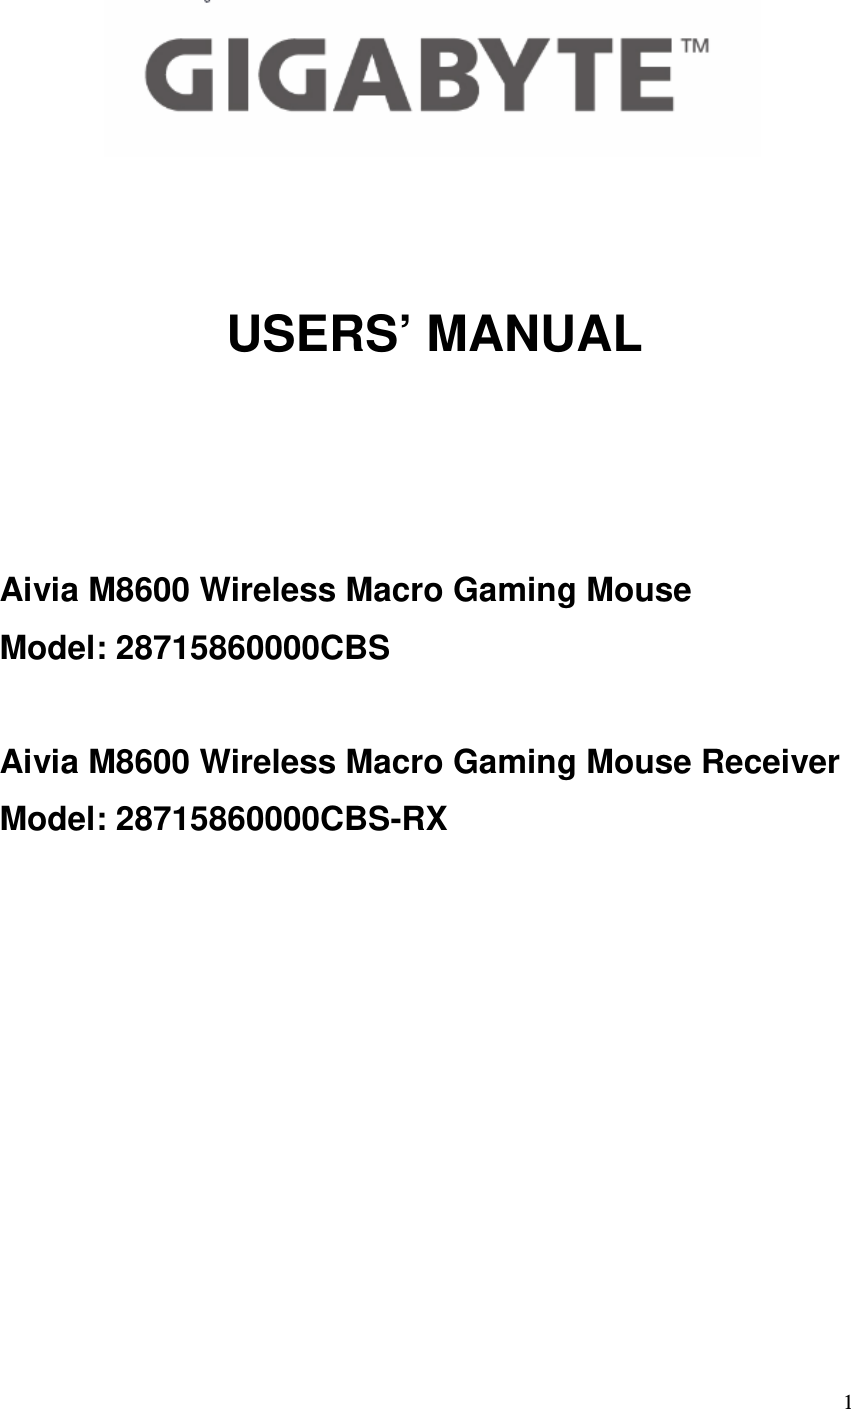  1      USERS’ MANUAL     Aivia M8600 Wireless Macro Gaming Mouse Model: 28715860000CBS  Aivia M8600 Wireless Macro Gaming Mouse Receiver Model: 28715860000CBS-RX              